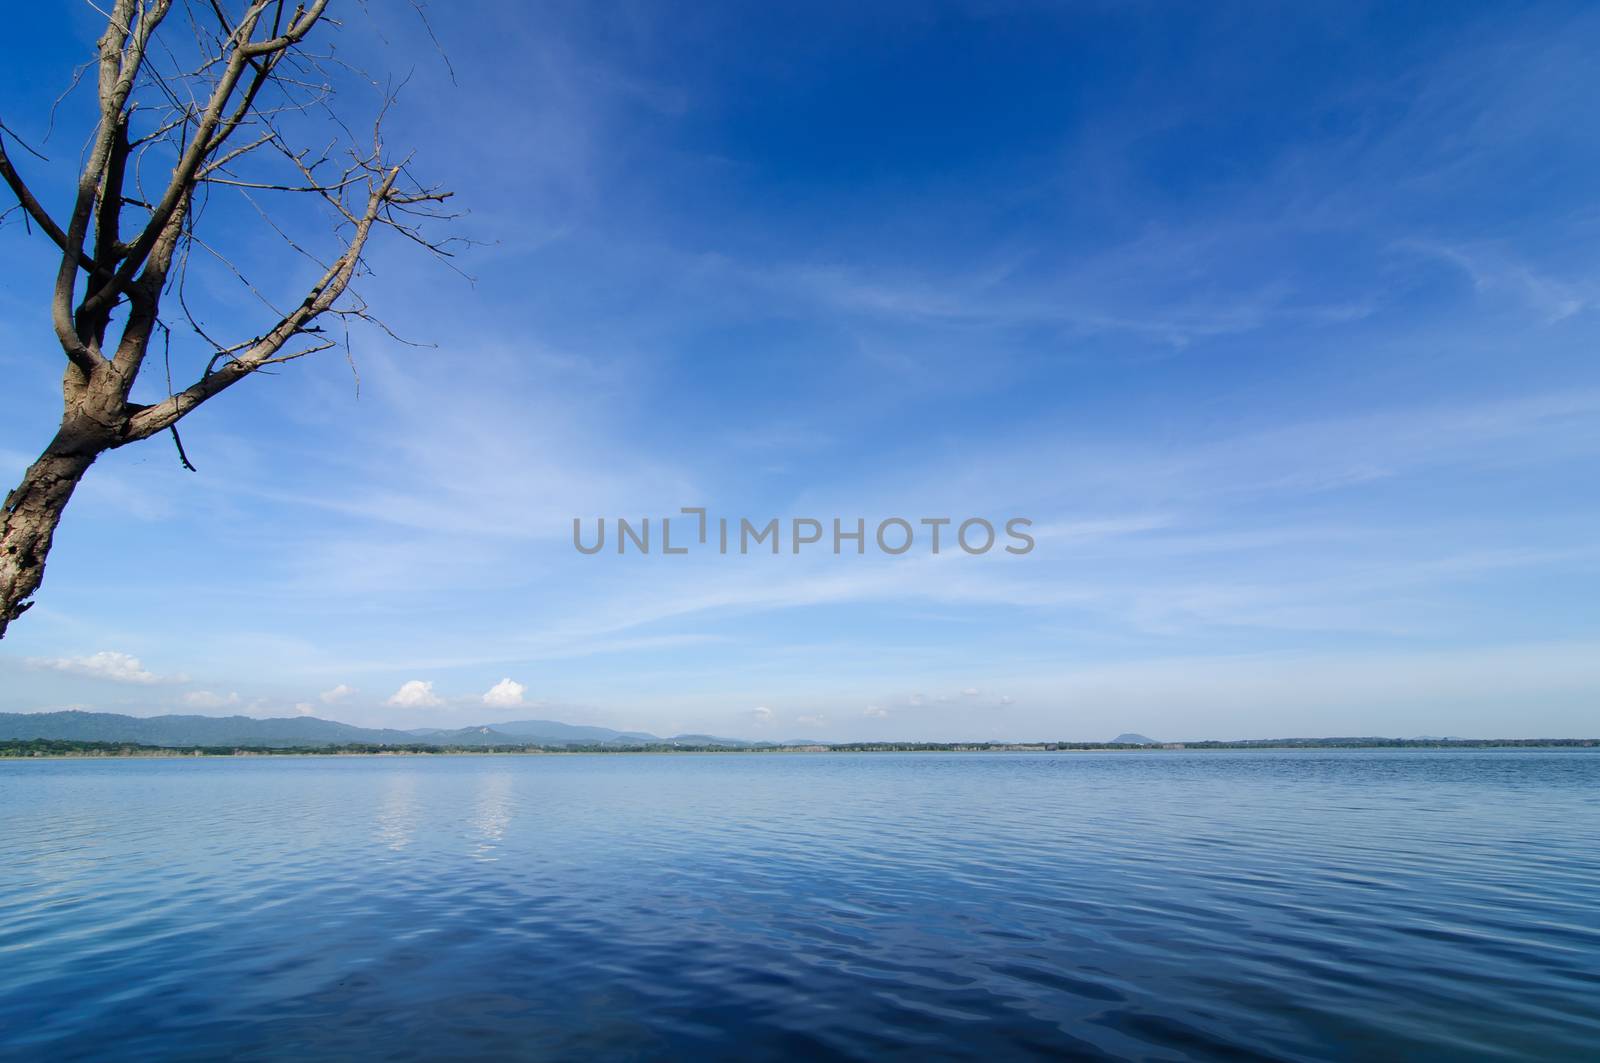 Reservoir in the bang phra, Chonburi Thailand.